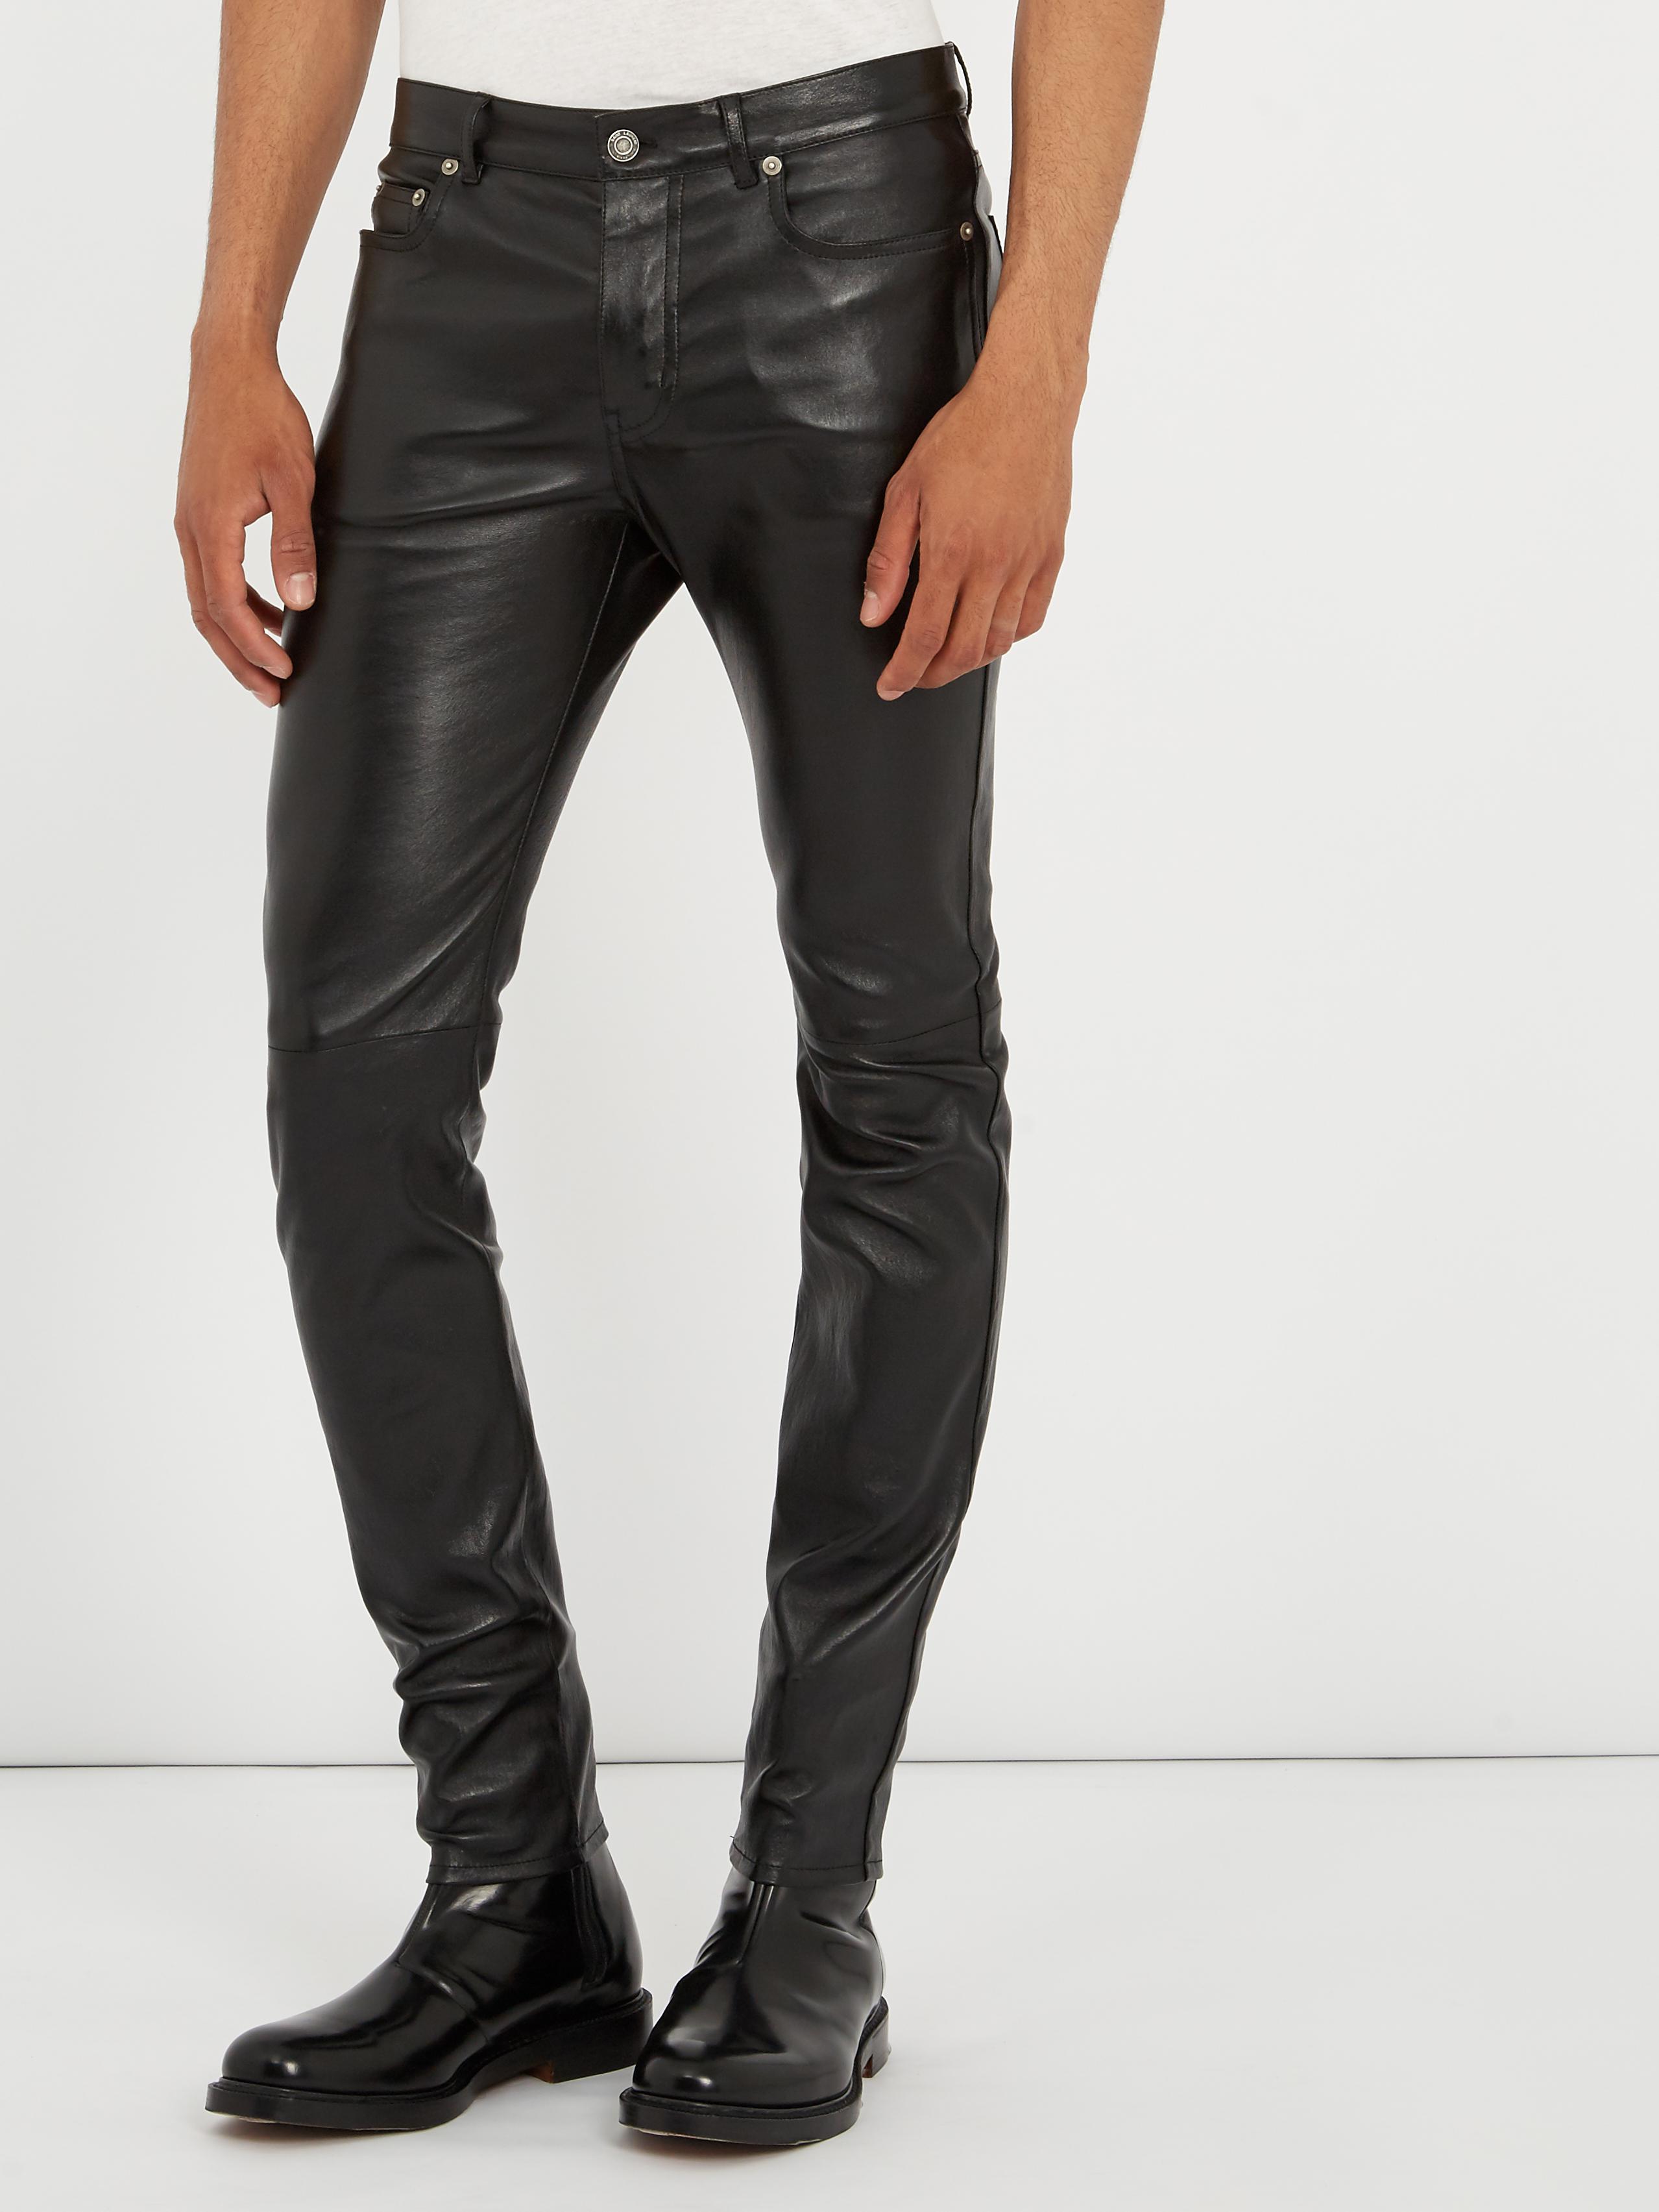 Saint Laurent Skinny Leather Jeans in Black for Men - Lyst